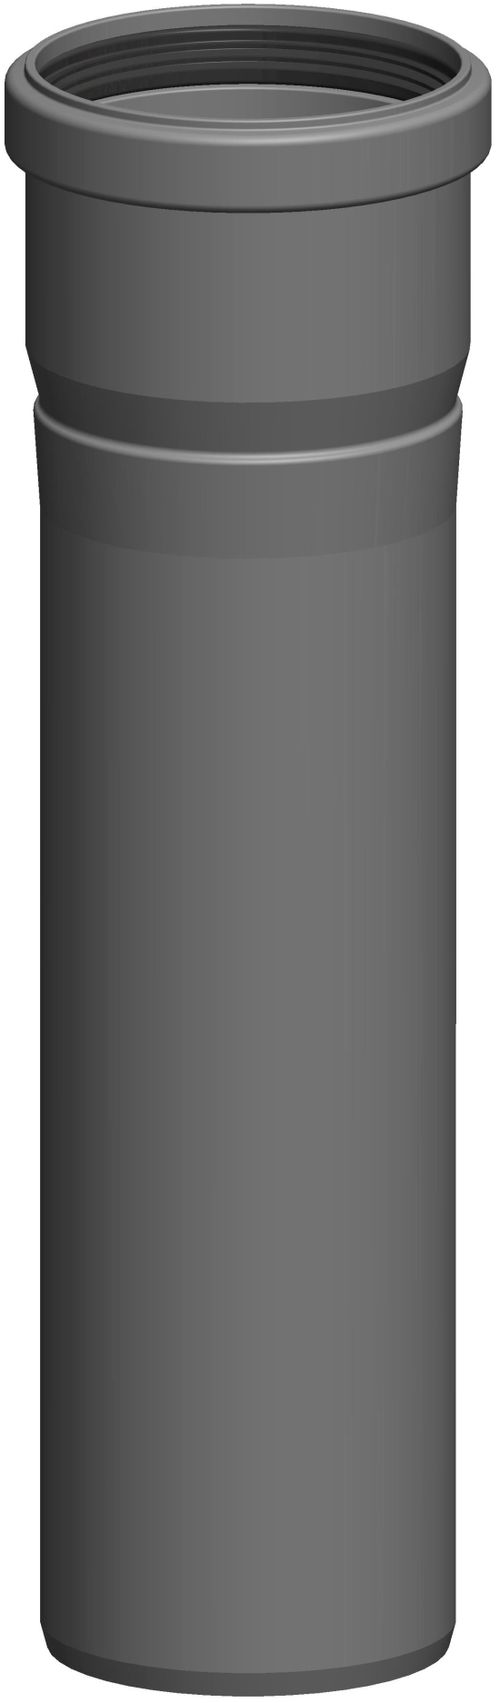 ATEC-Rohr-255mm-DN-80-kuerzbar-einwandig-1317